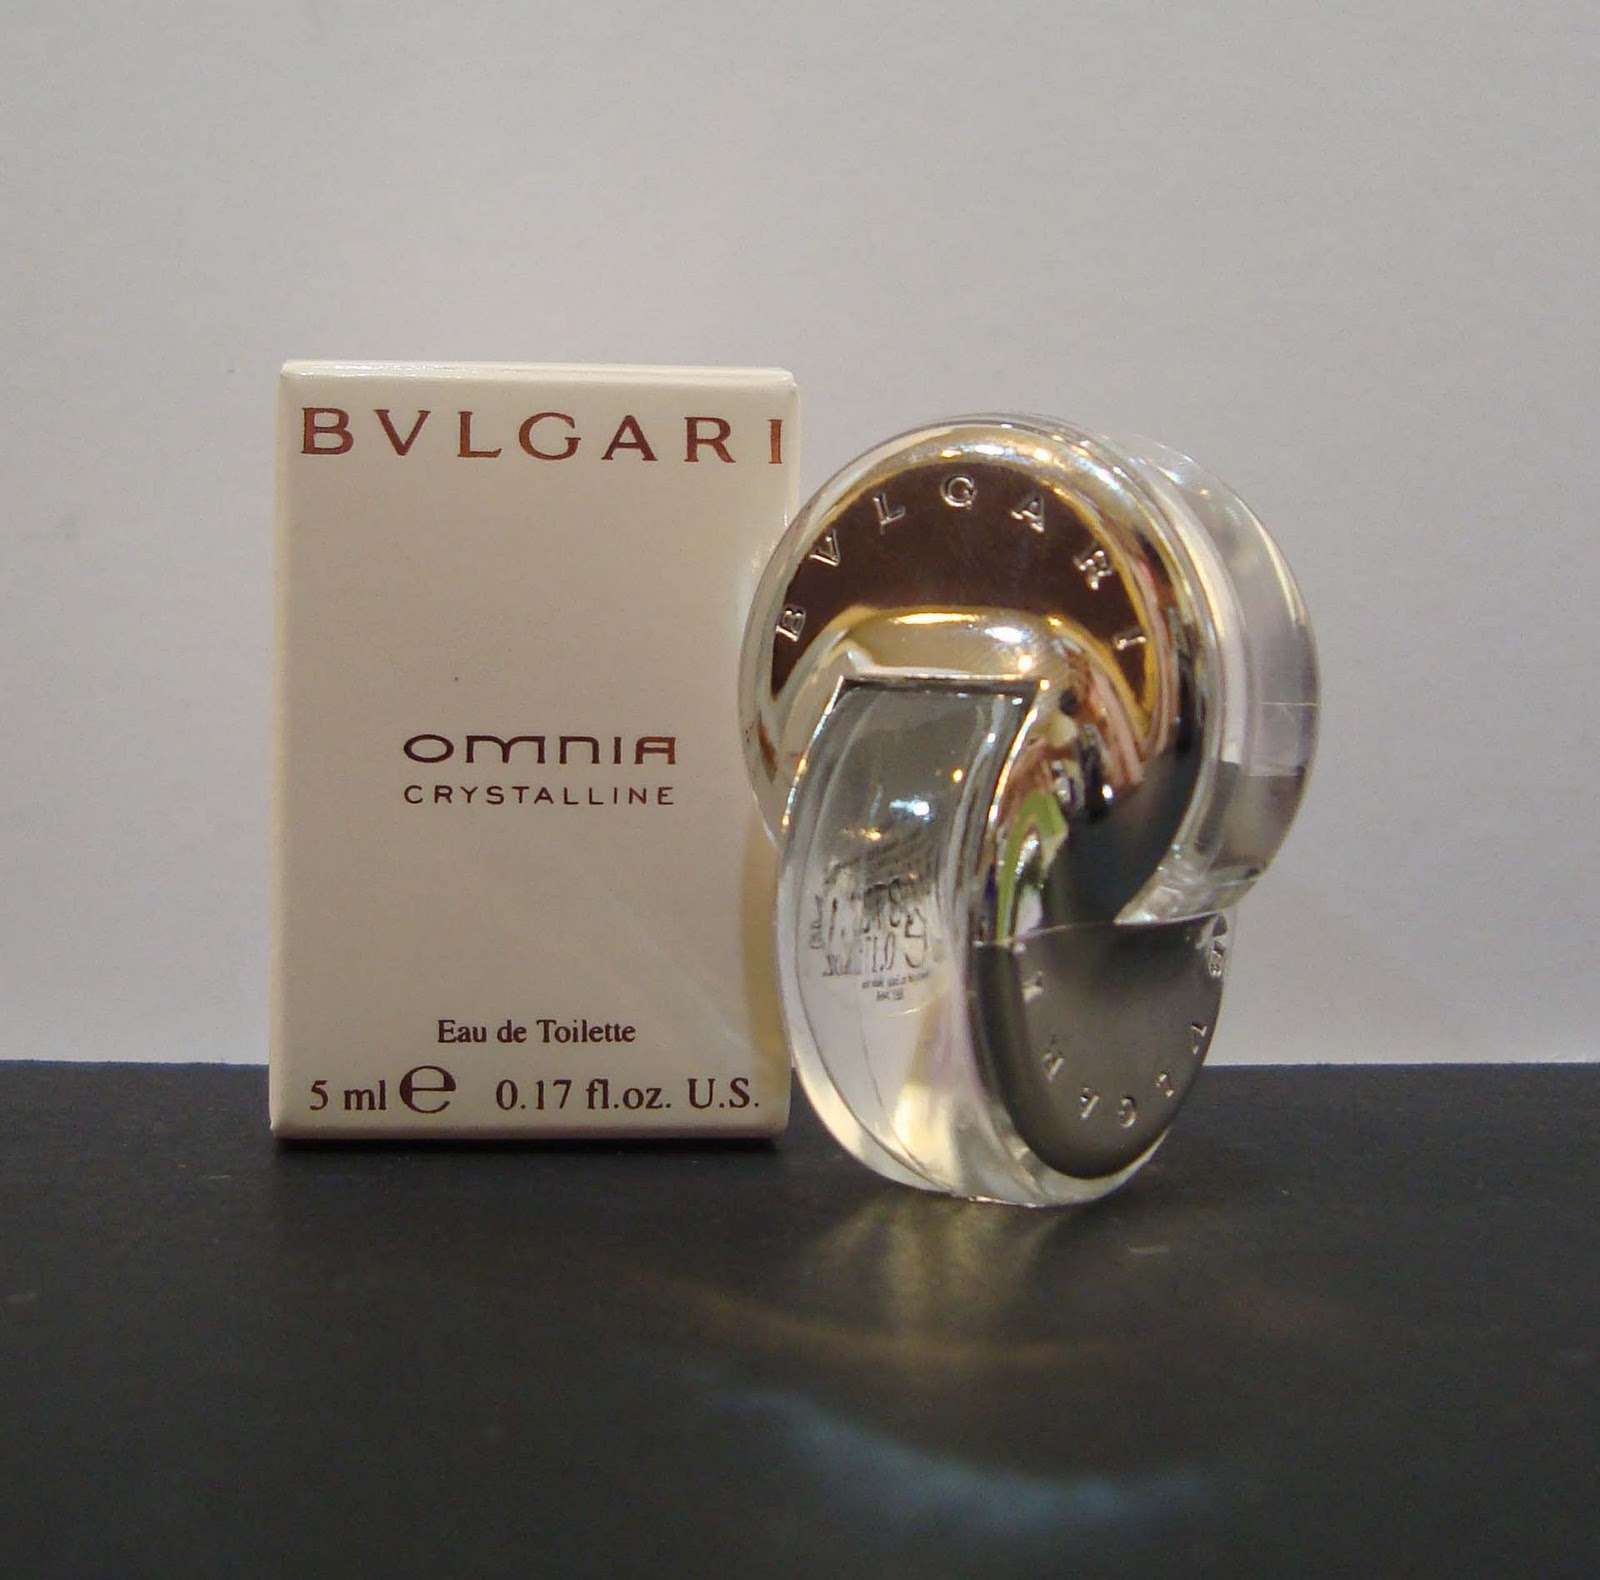 Parfum Bar: Bvlgari Omnia Crystalline